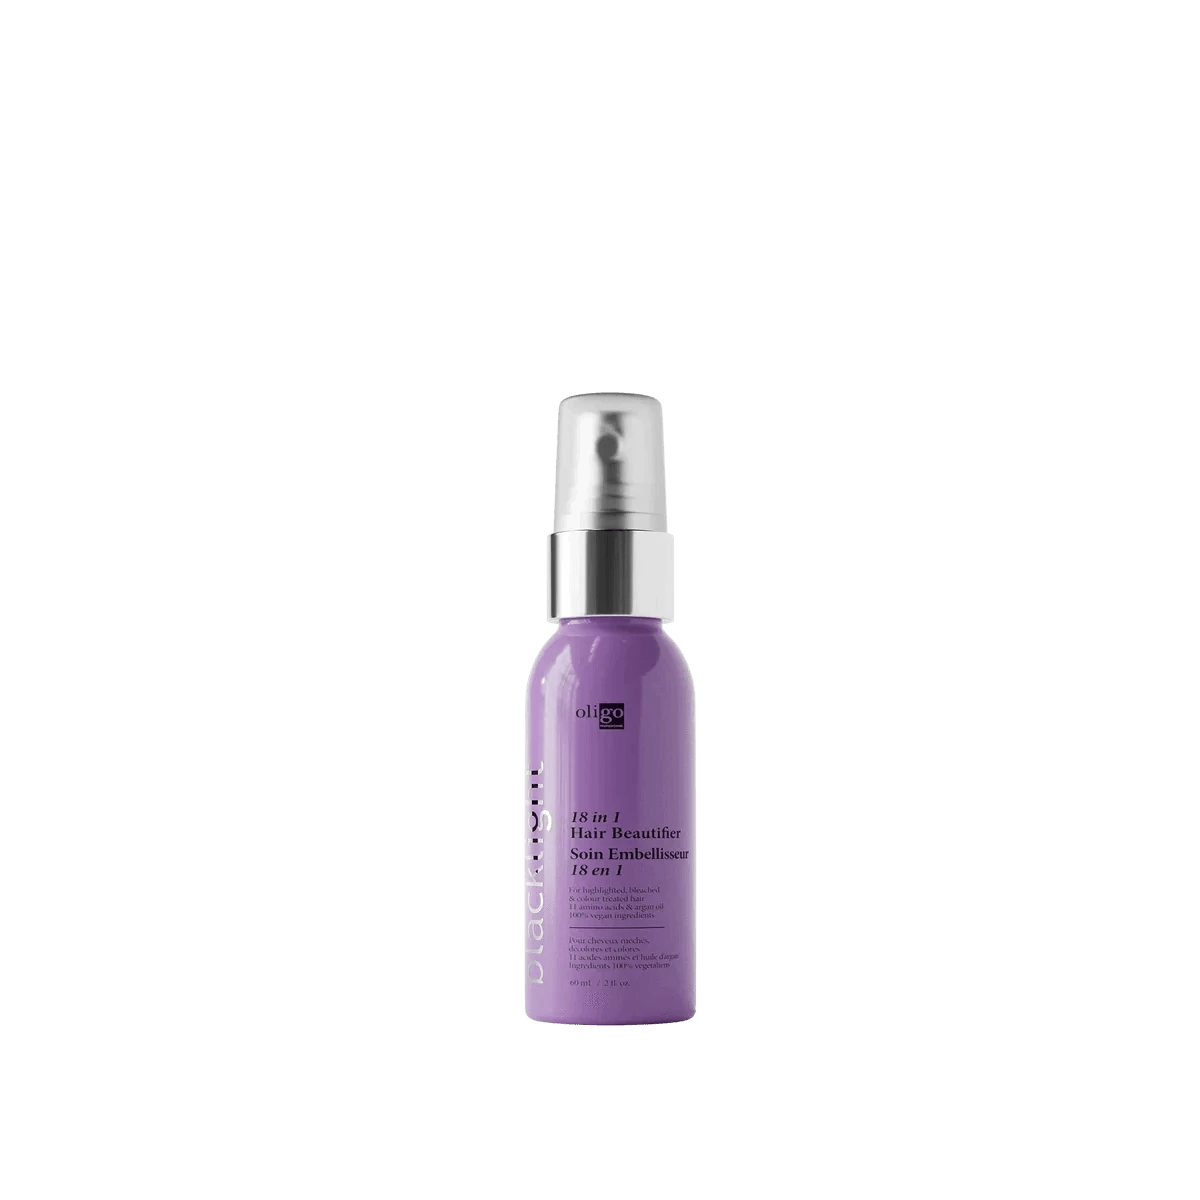 A bottle of Oligo Blacklight 18-in-1 Hair Beautifier purple hair spray from Oligo for optimal hydration and shine.